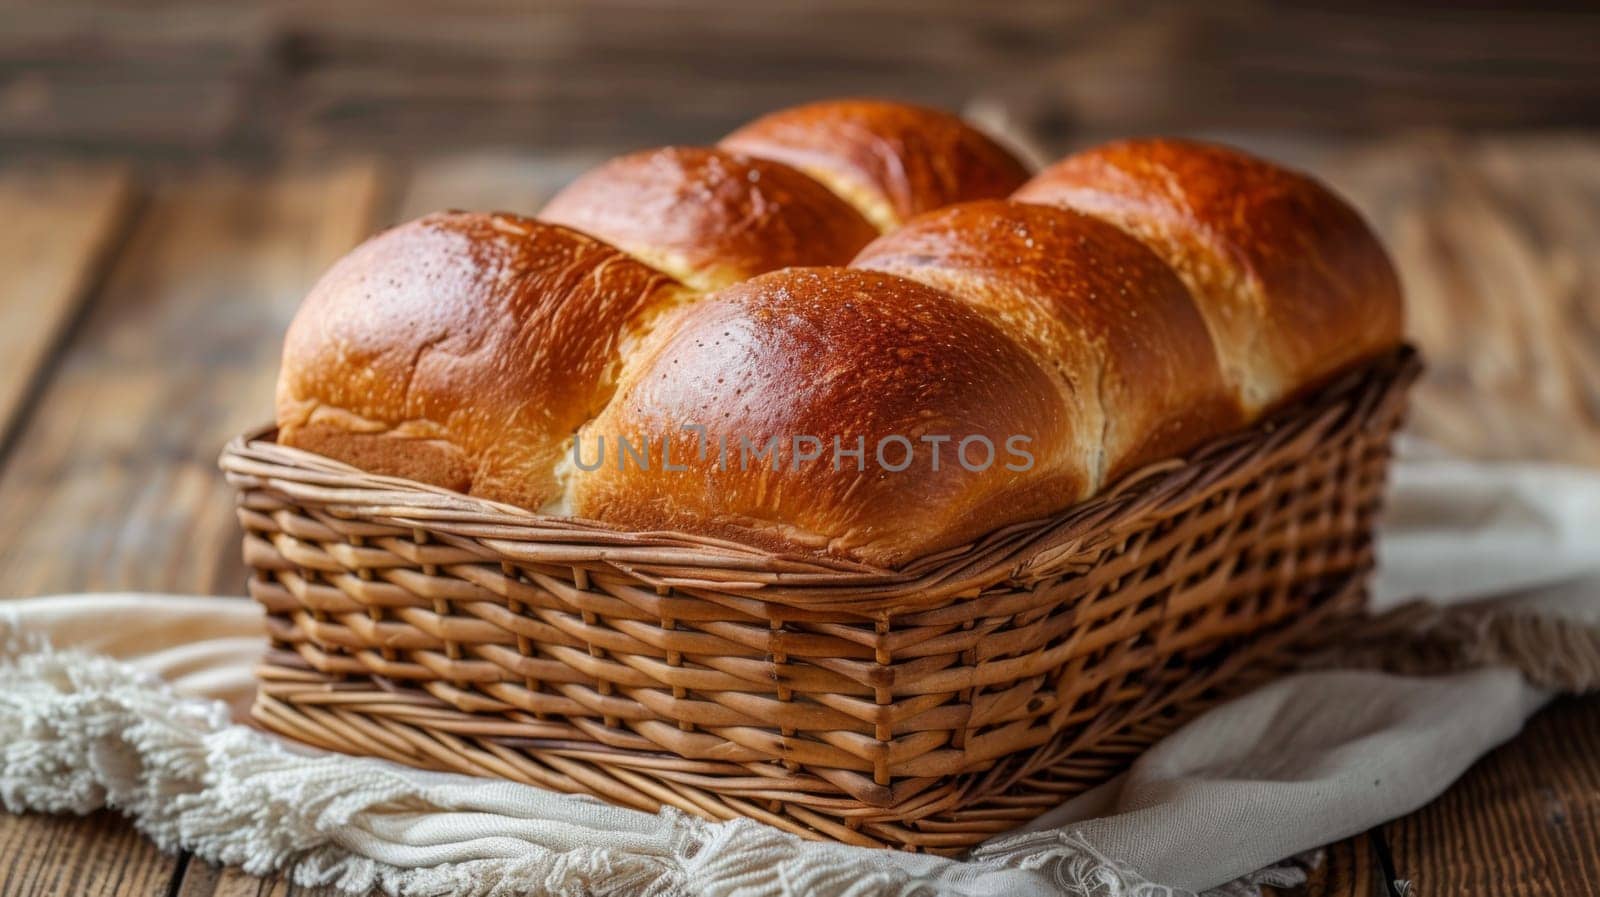 A basket of fresh bread in a woven wicker tray, AI by starush